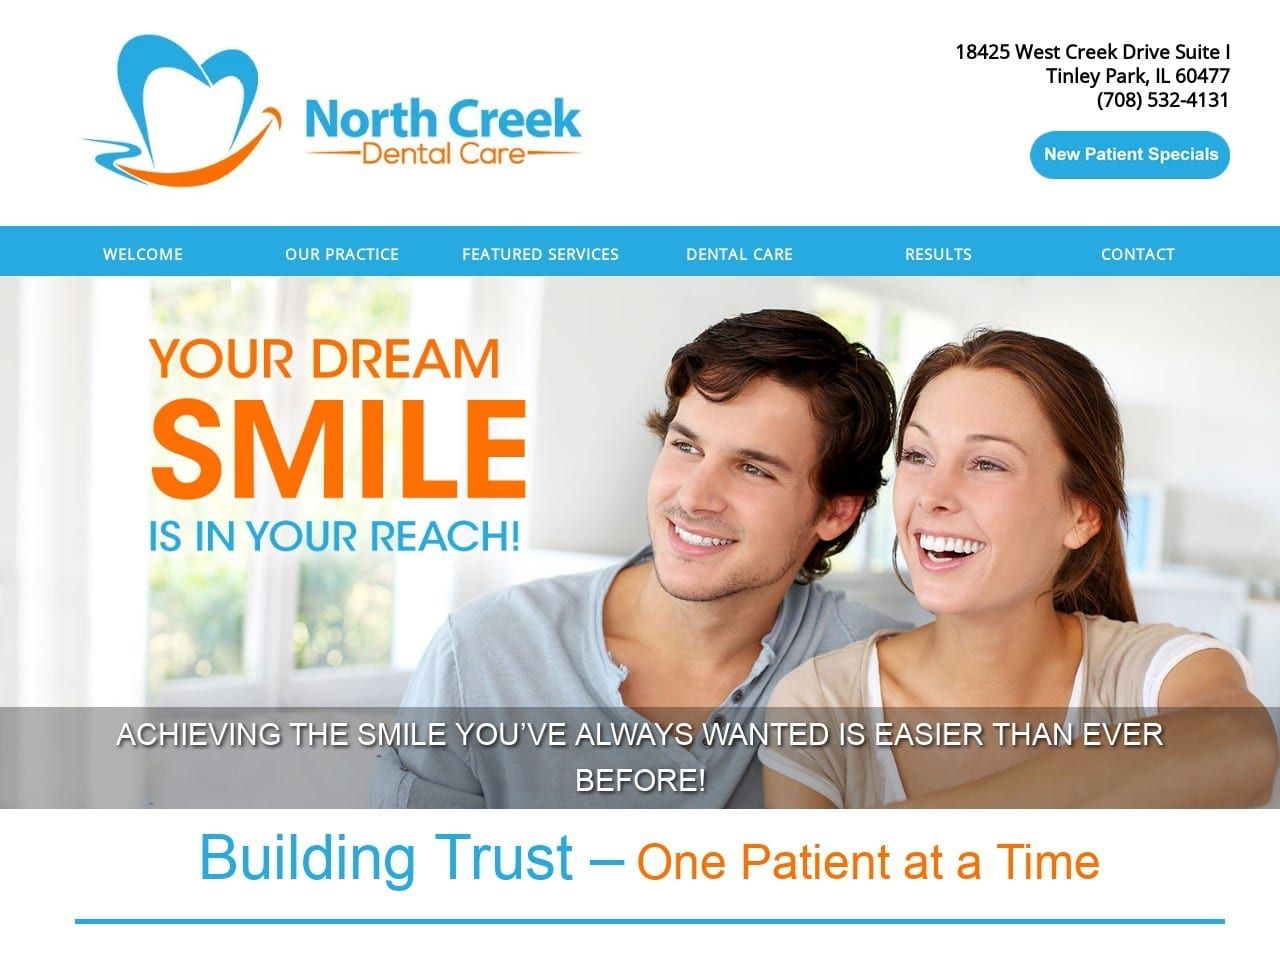 North Creek Dental Care Website Screenshot from northcreekdentalcare.com